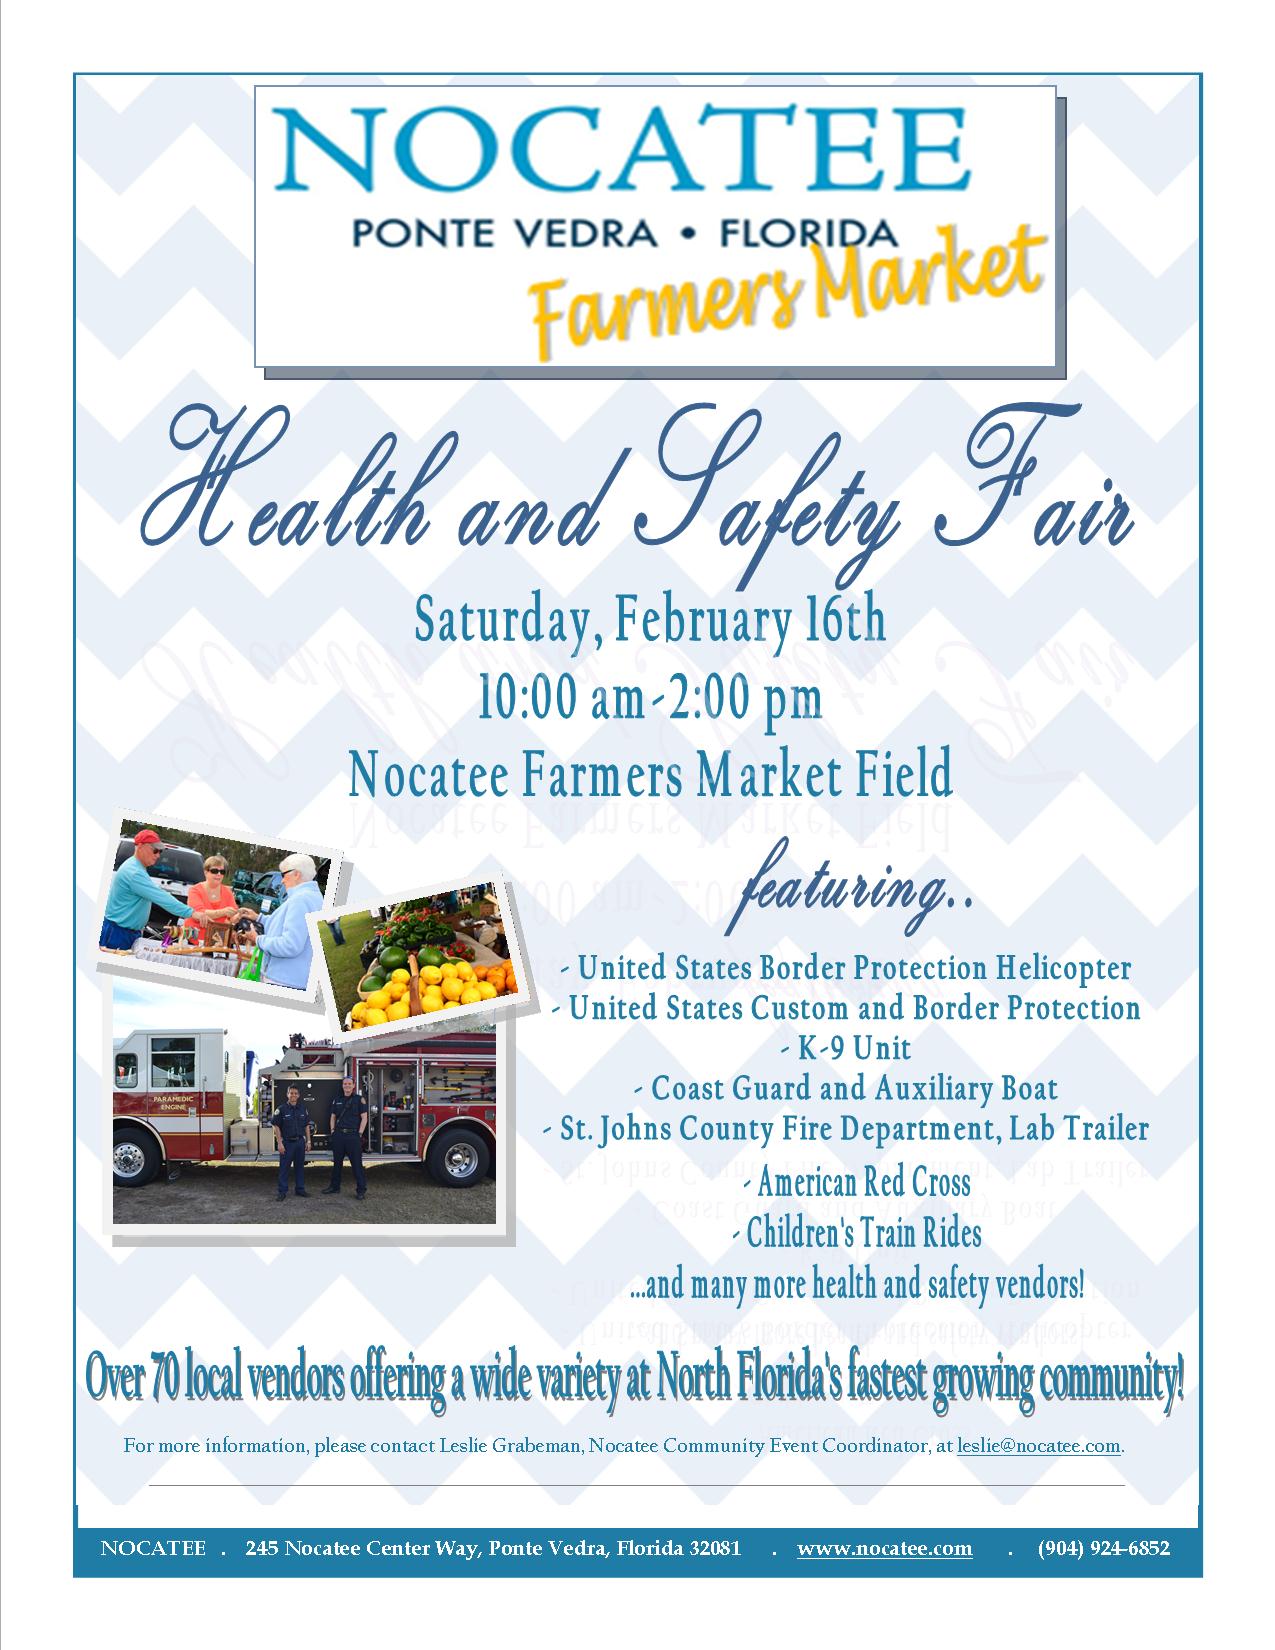 Nocatee Farmers Market event